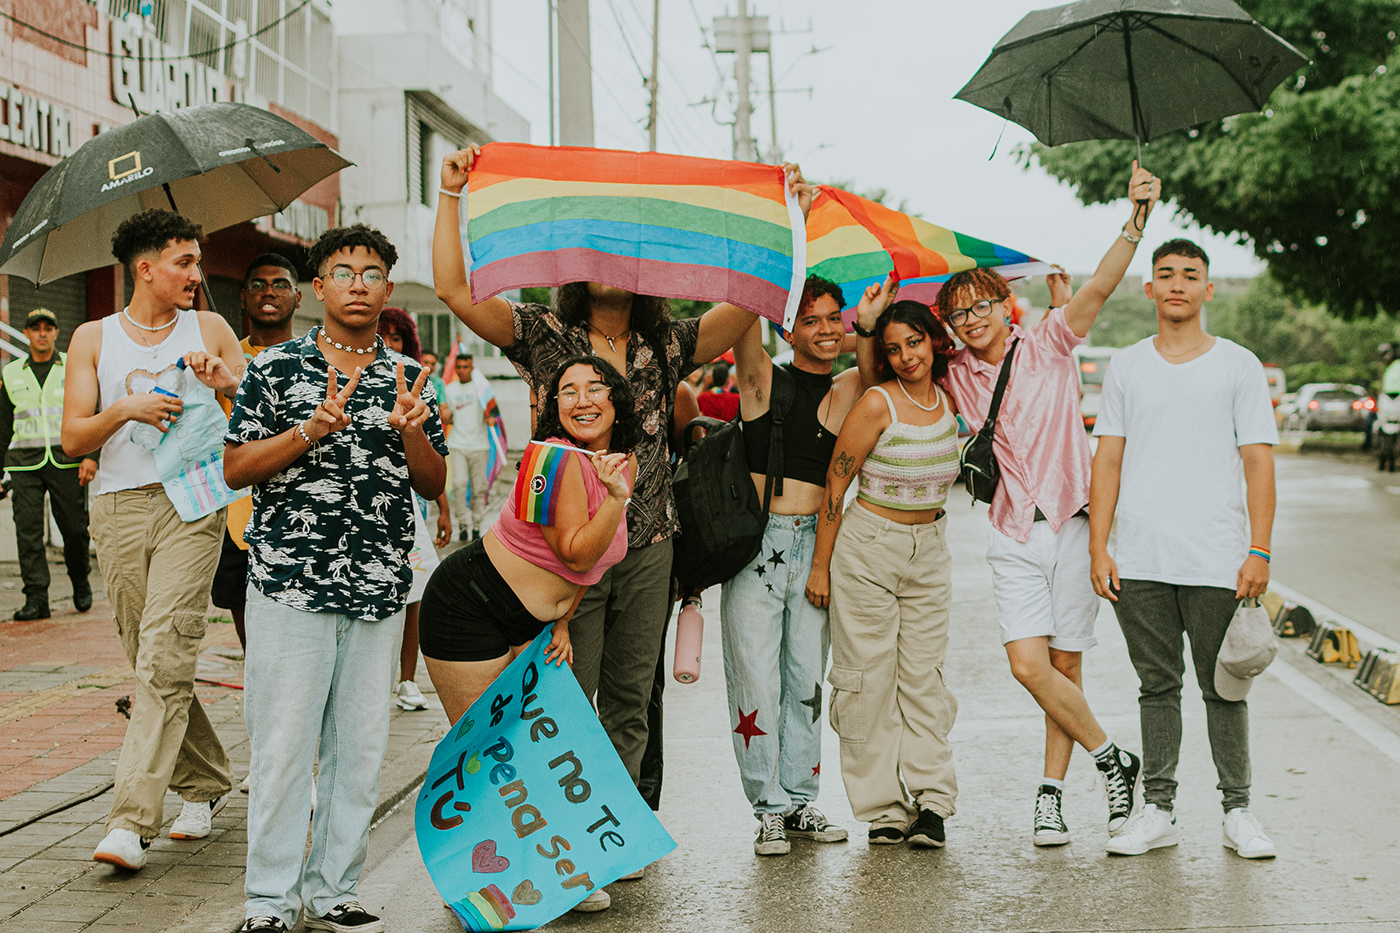 Cartagena colombia kiss lesbian LGBT Love pride queer Drag gay